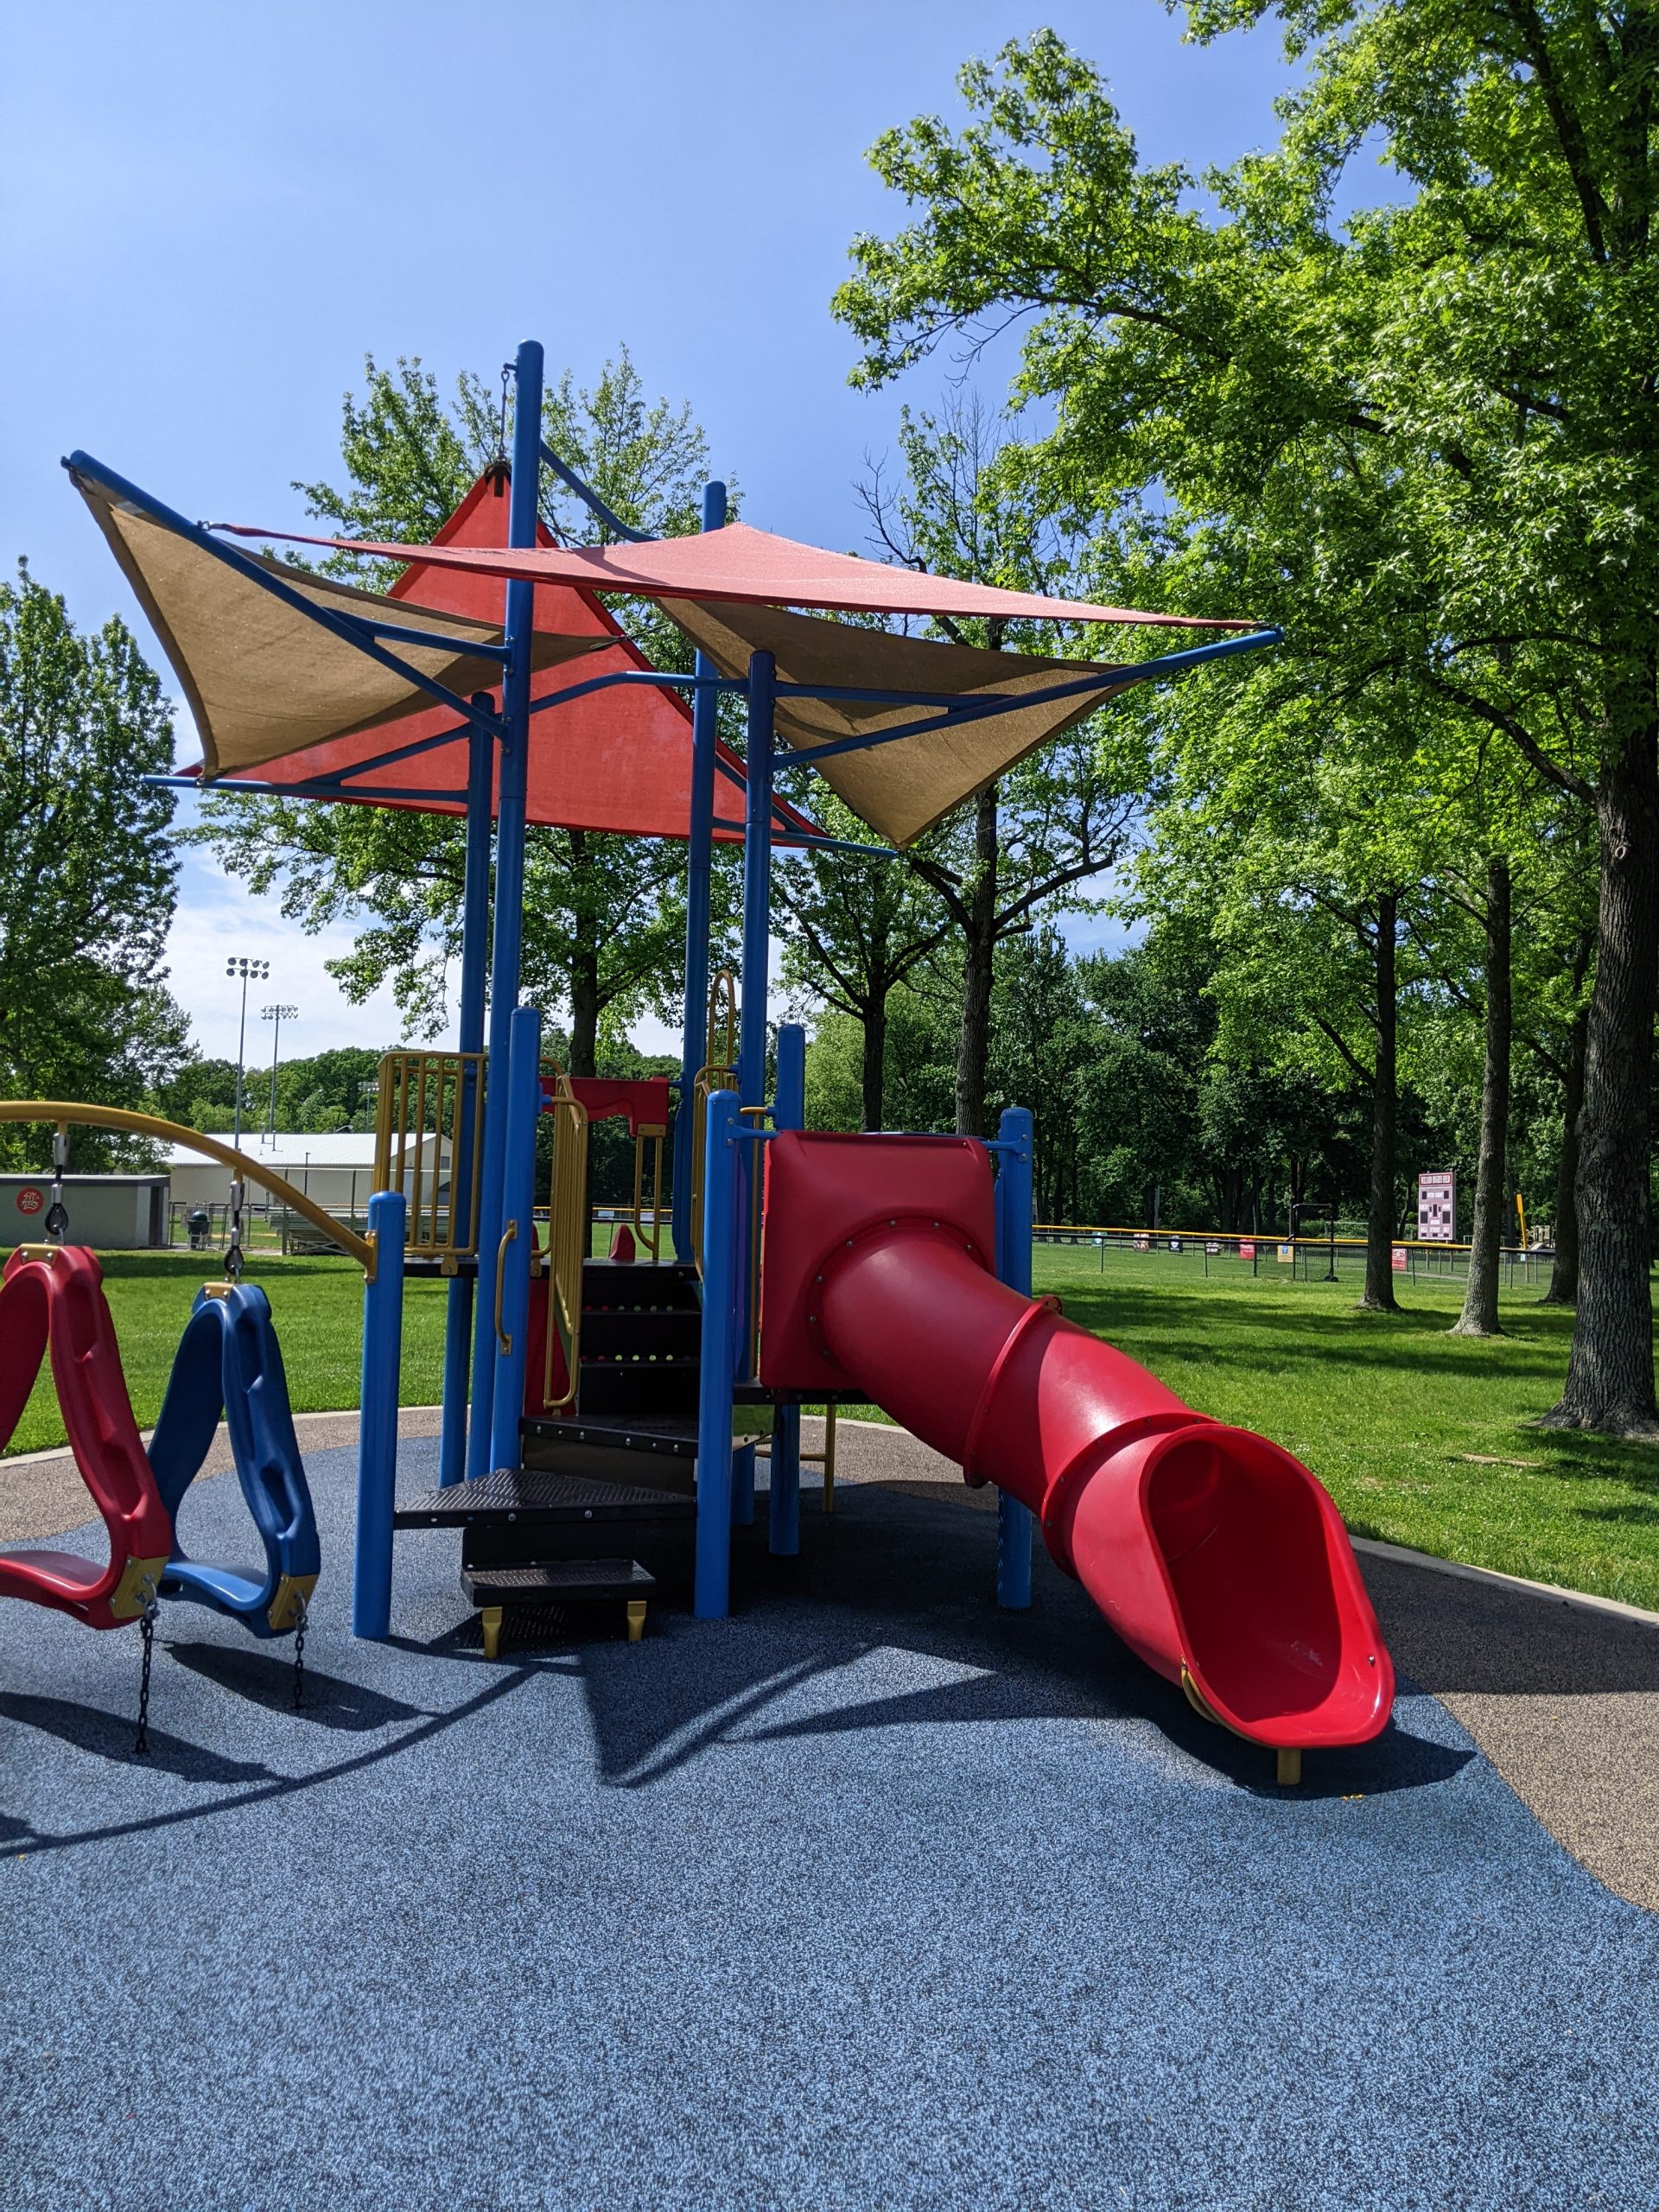 Central Park Playground in Lawrenceville NJ toddler and preschooler playground TubeSlide